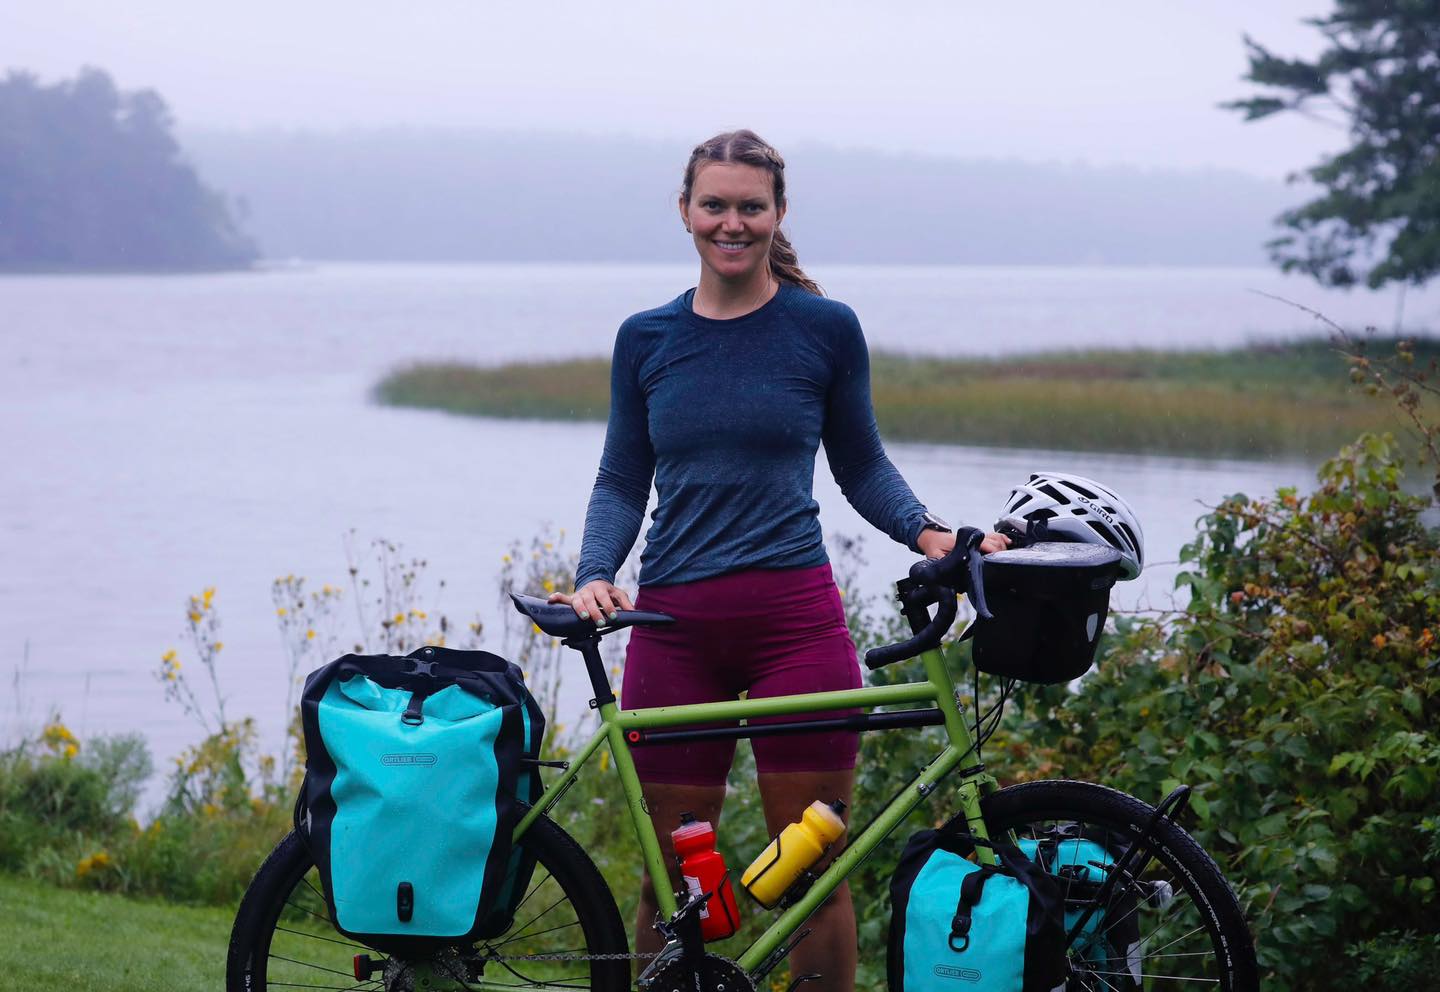 User Stories: Katie Spotz and Ride 4 Water